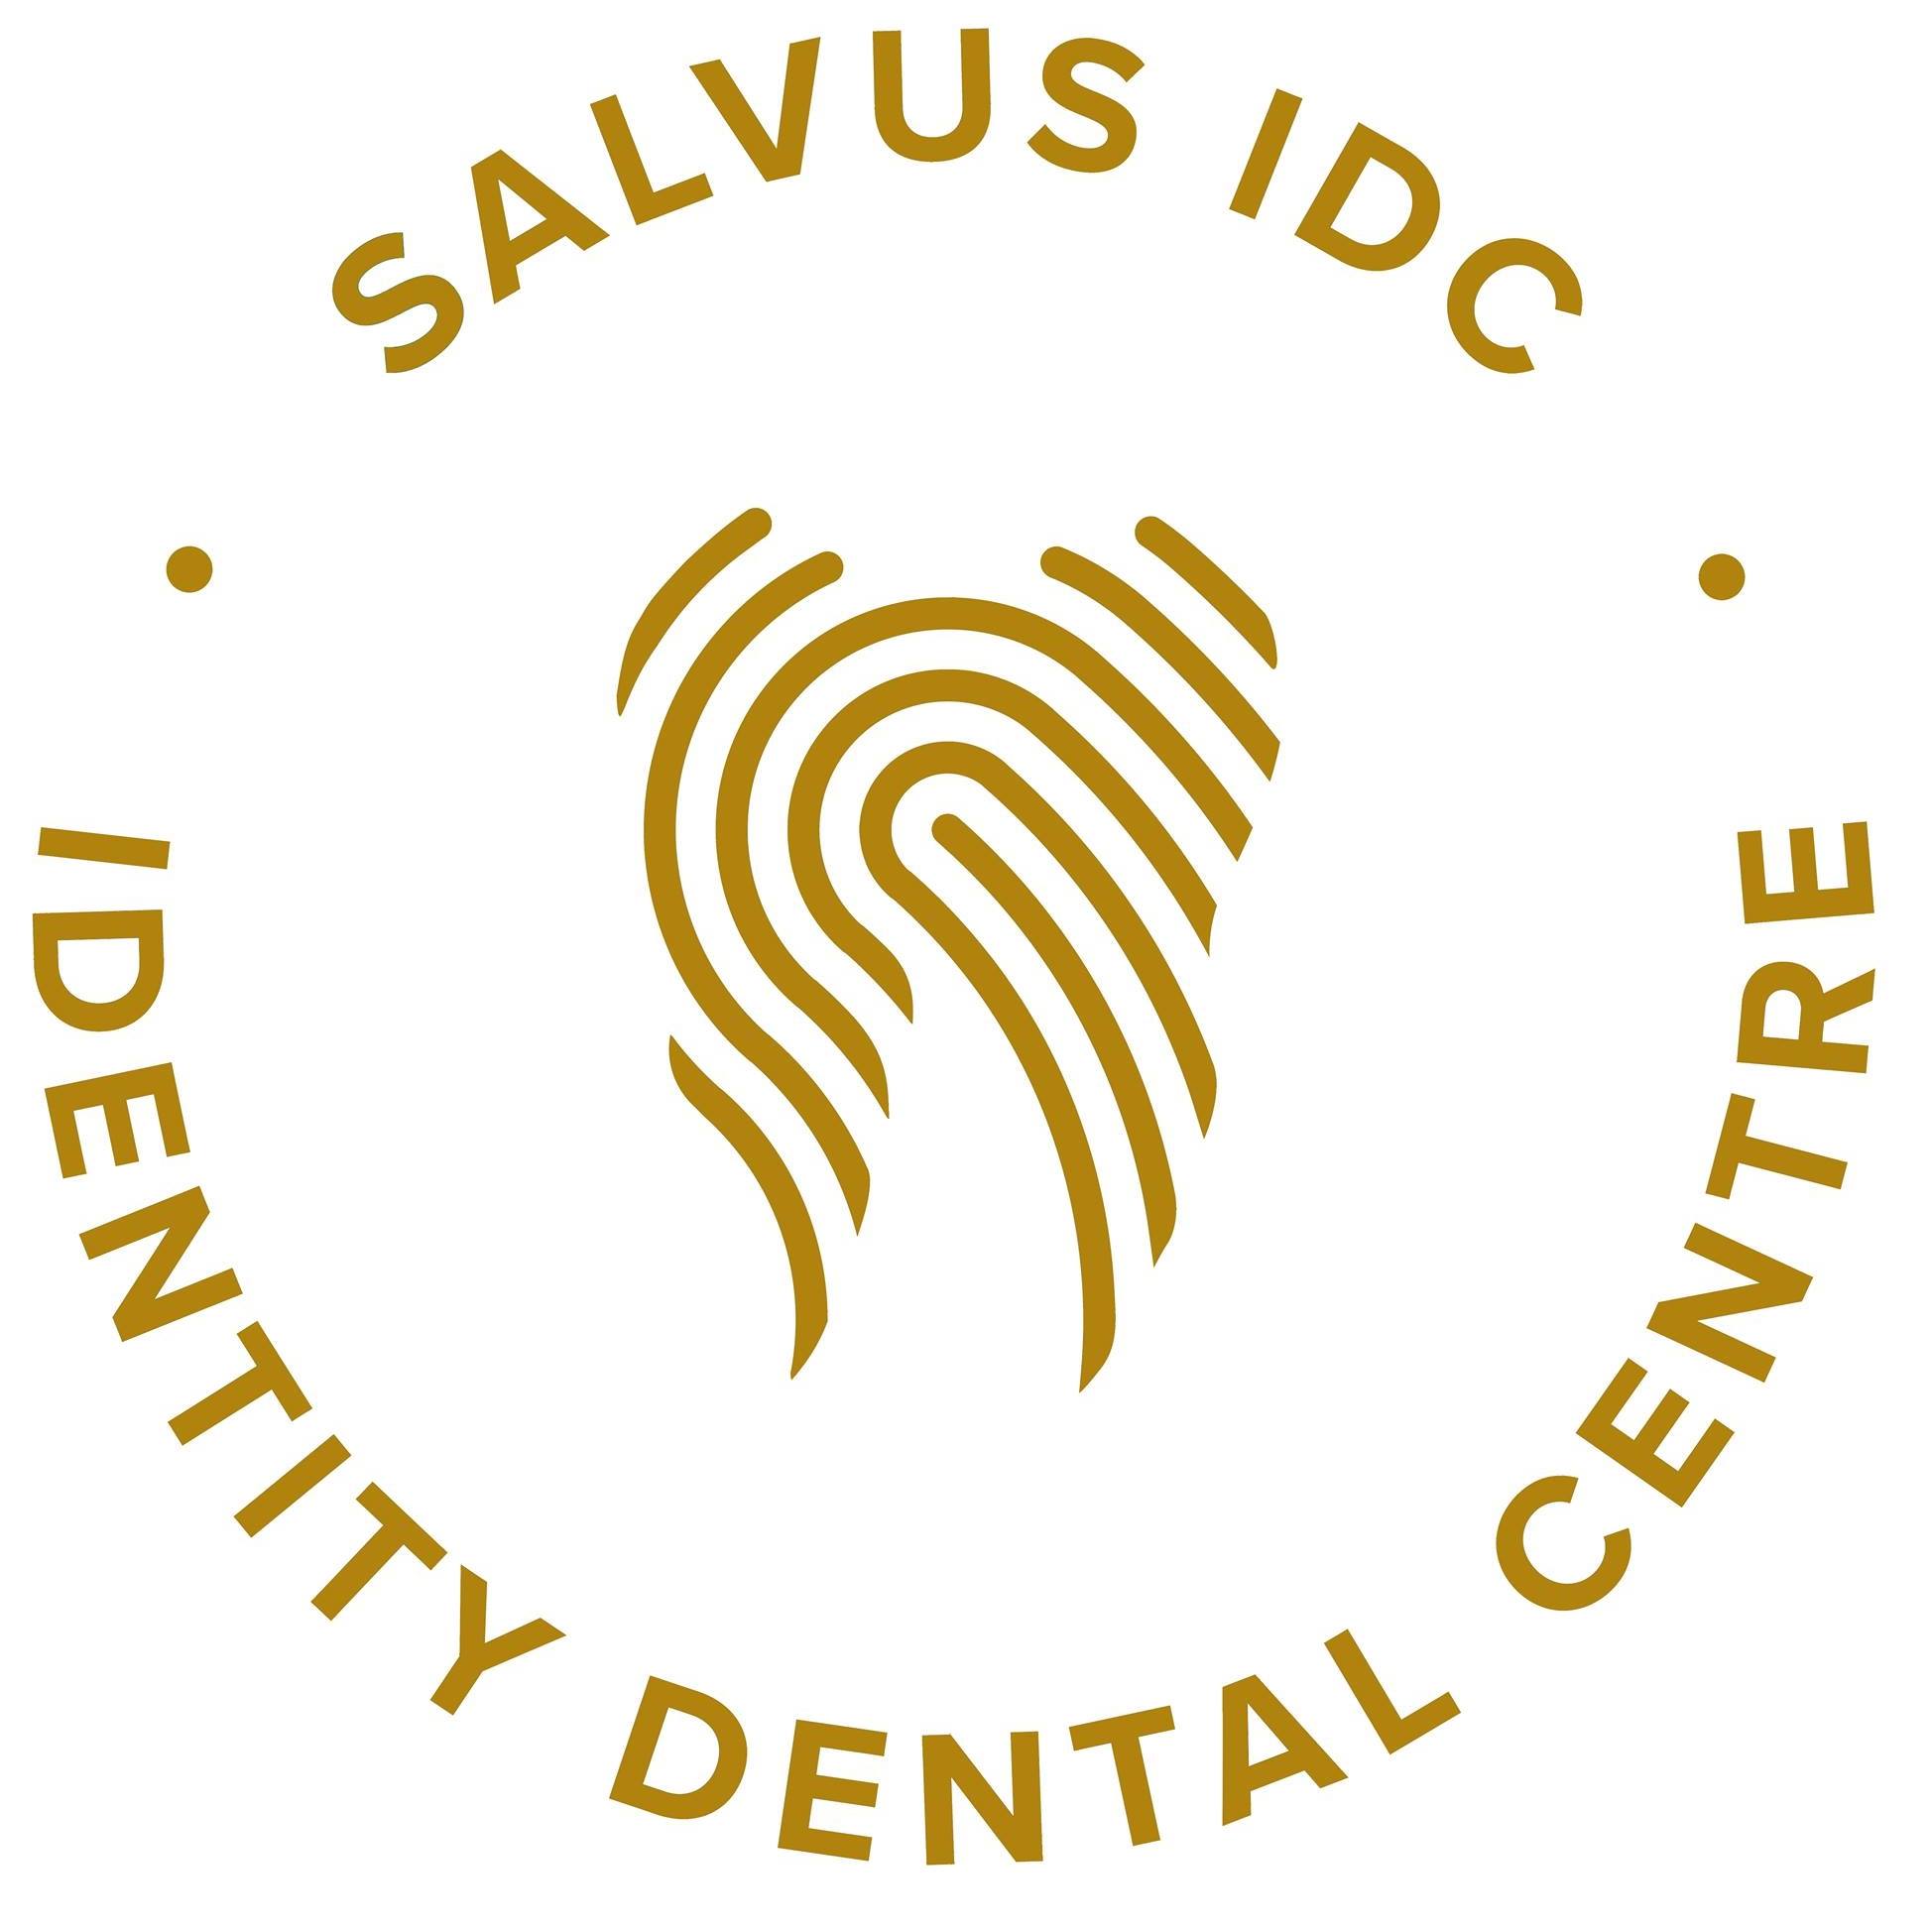 Salvus-idc - logo